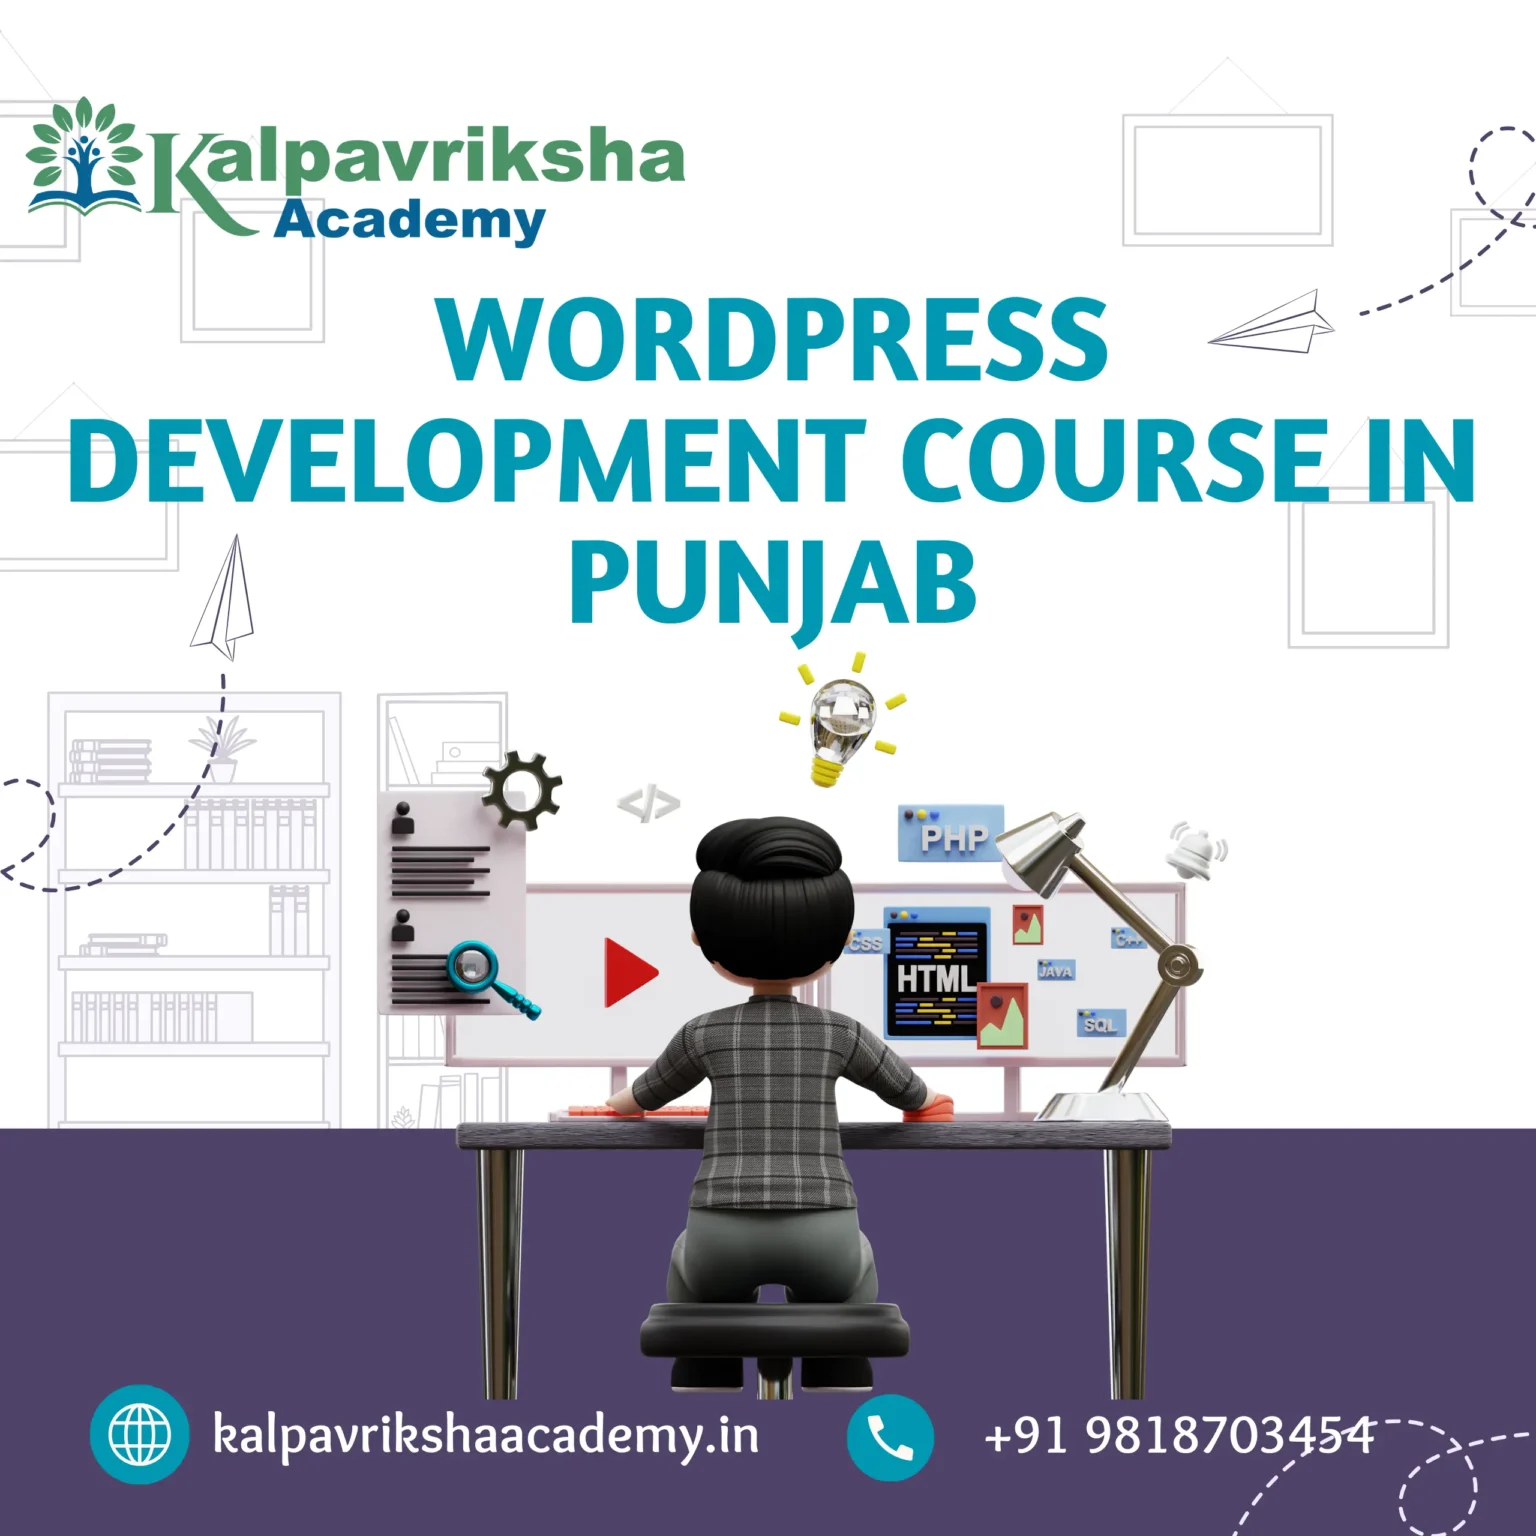 WordPress Development Course in Punjab